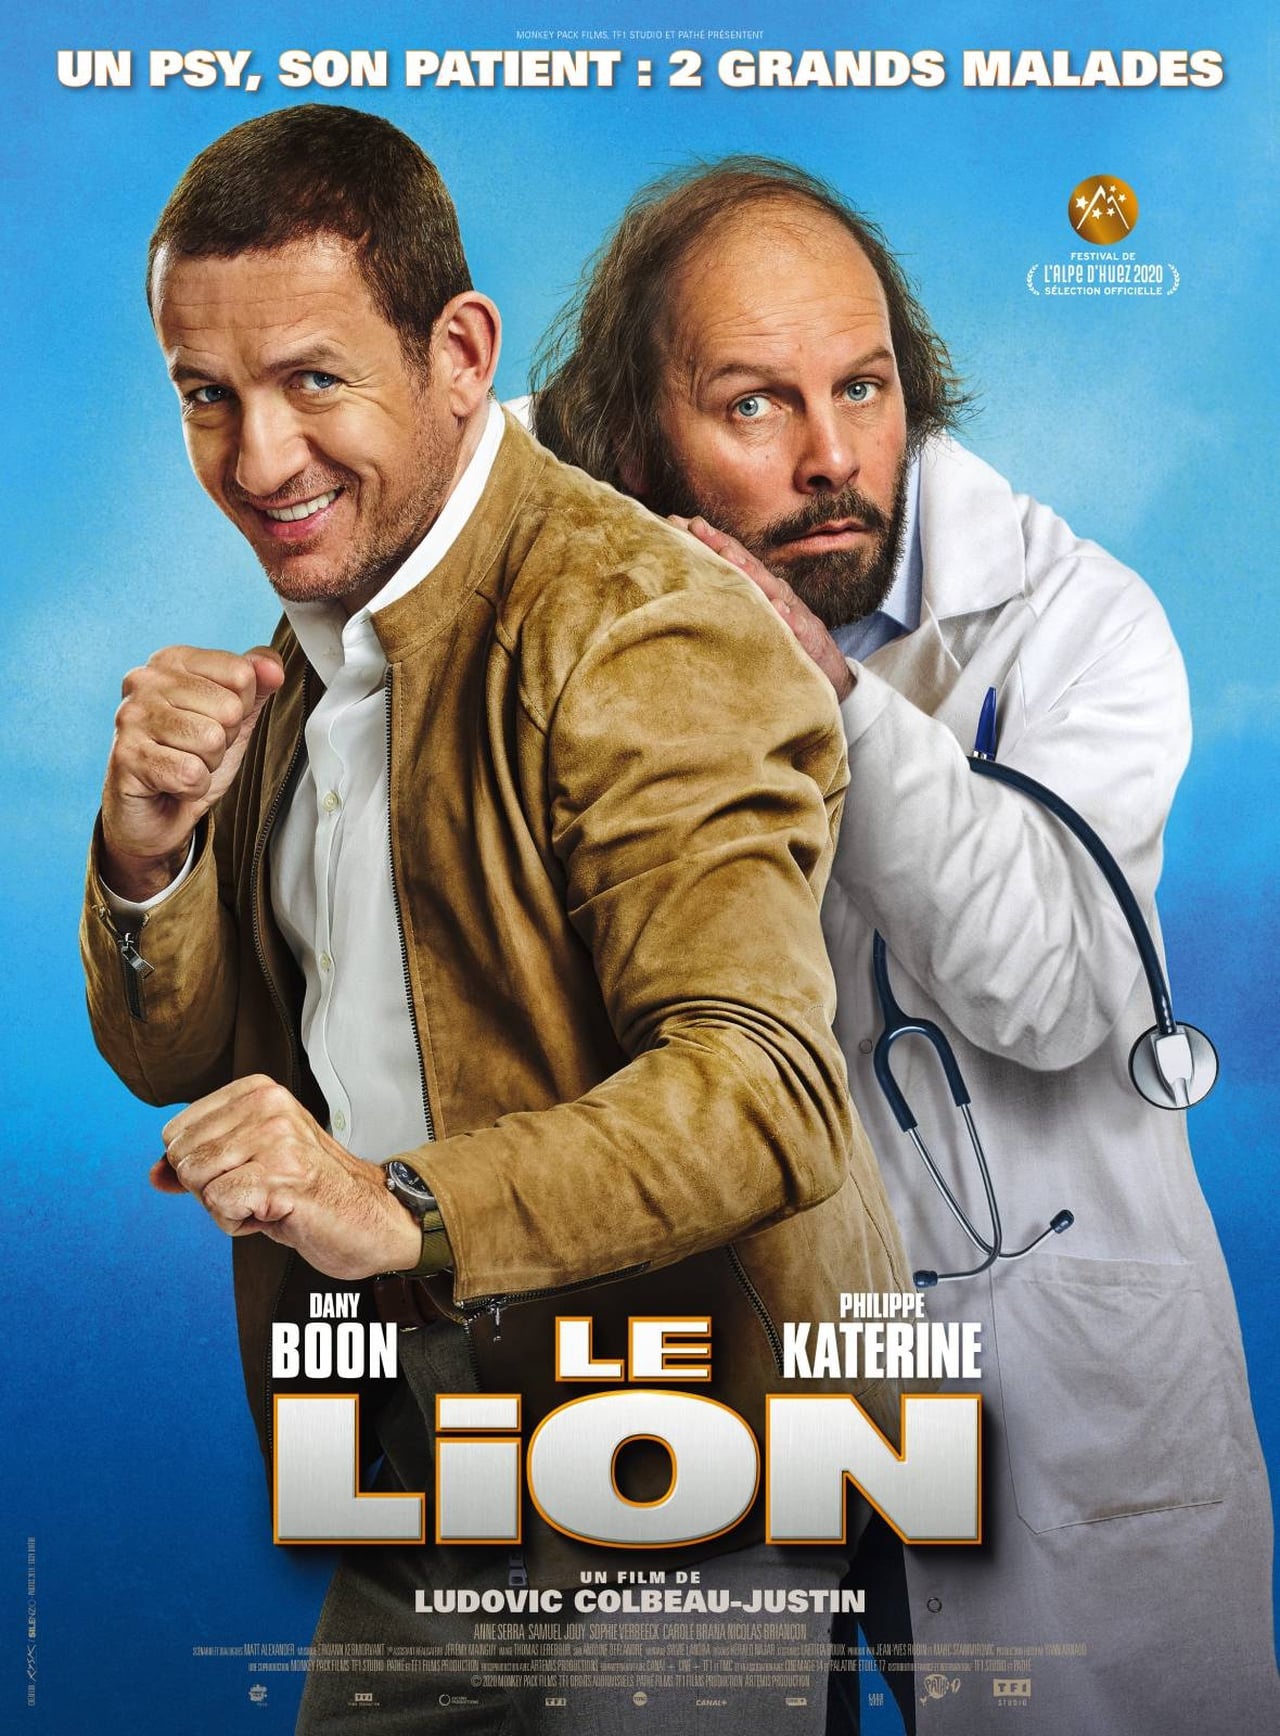 FR - Le Lion (2020) - DANY BOON